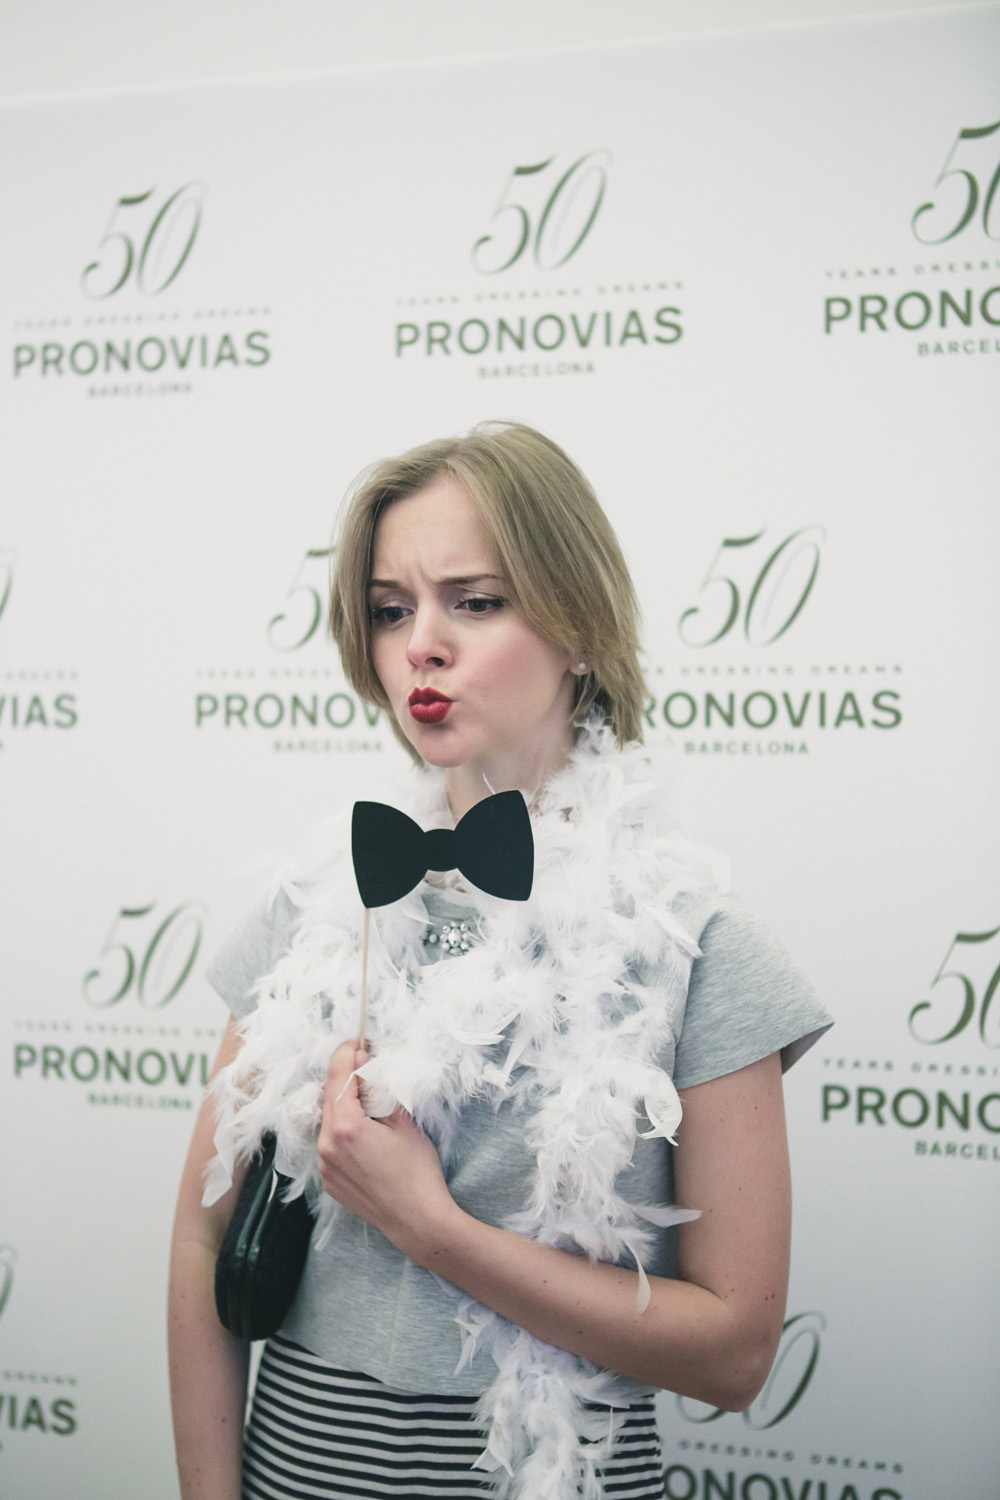 darya kamalova fashion blogger from thecablook in trip in Barcelona Spain with Pronovias wearing zara striped dress bottega veneta knot clutch for press dinner-1014